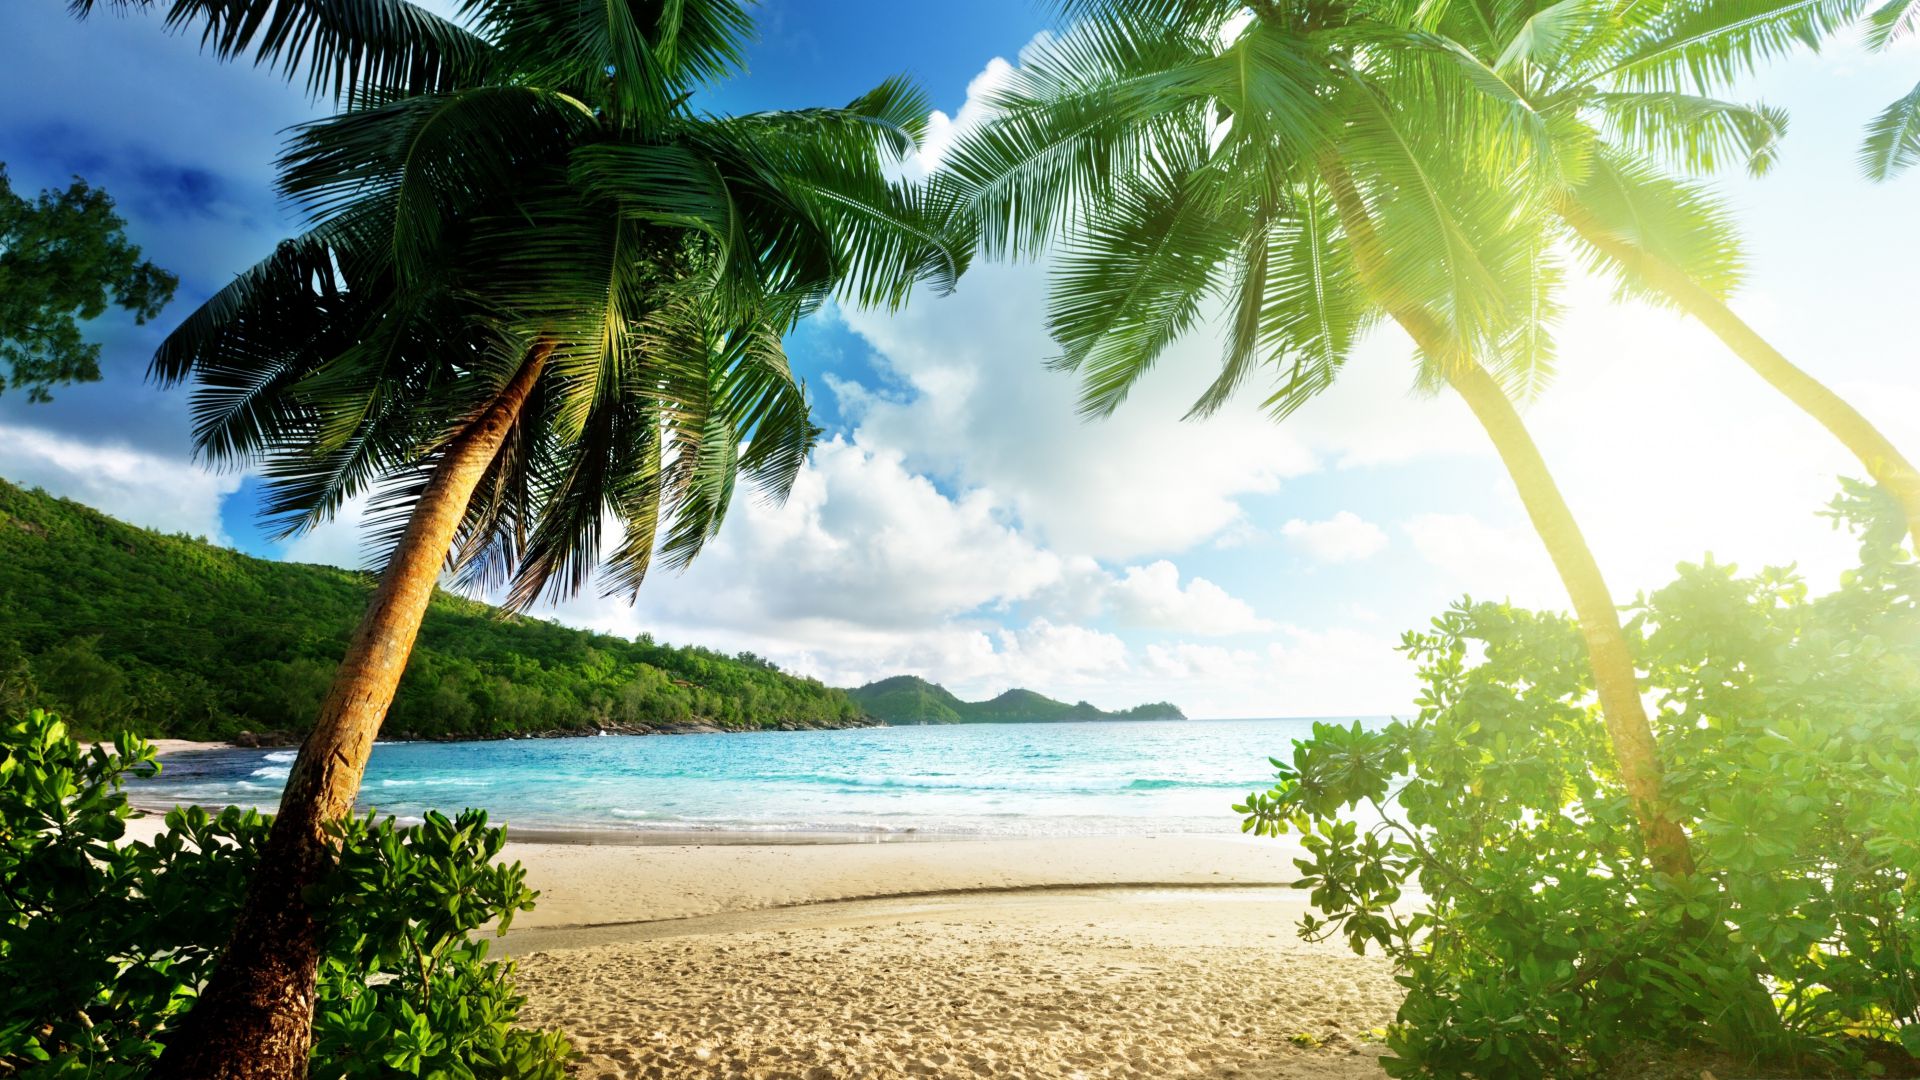 Thailand, 5k, 4k wallpaper, ocean, shore, palms, sun (horizontal)